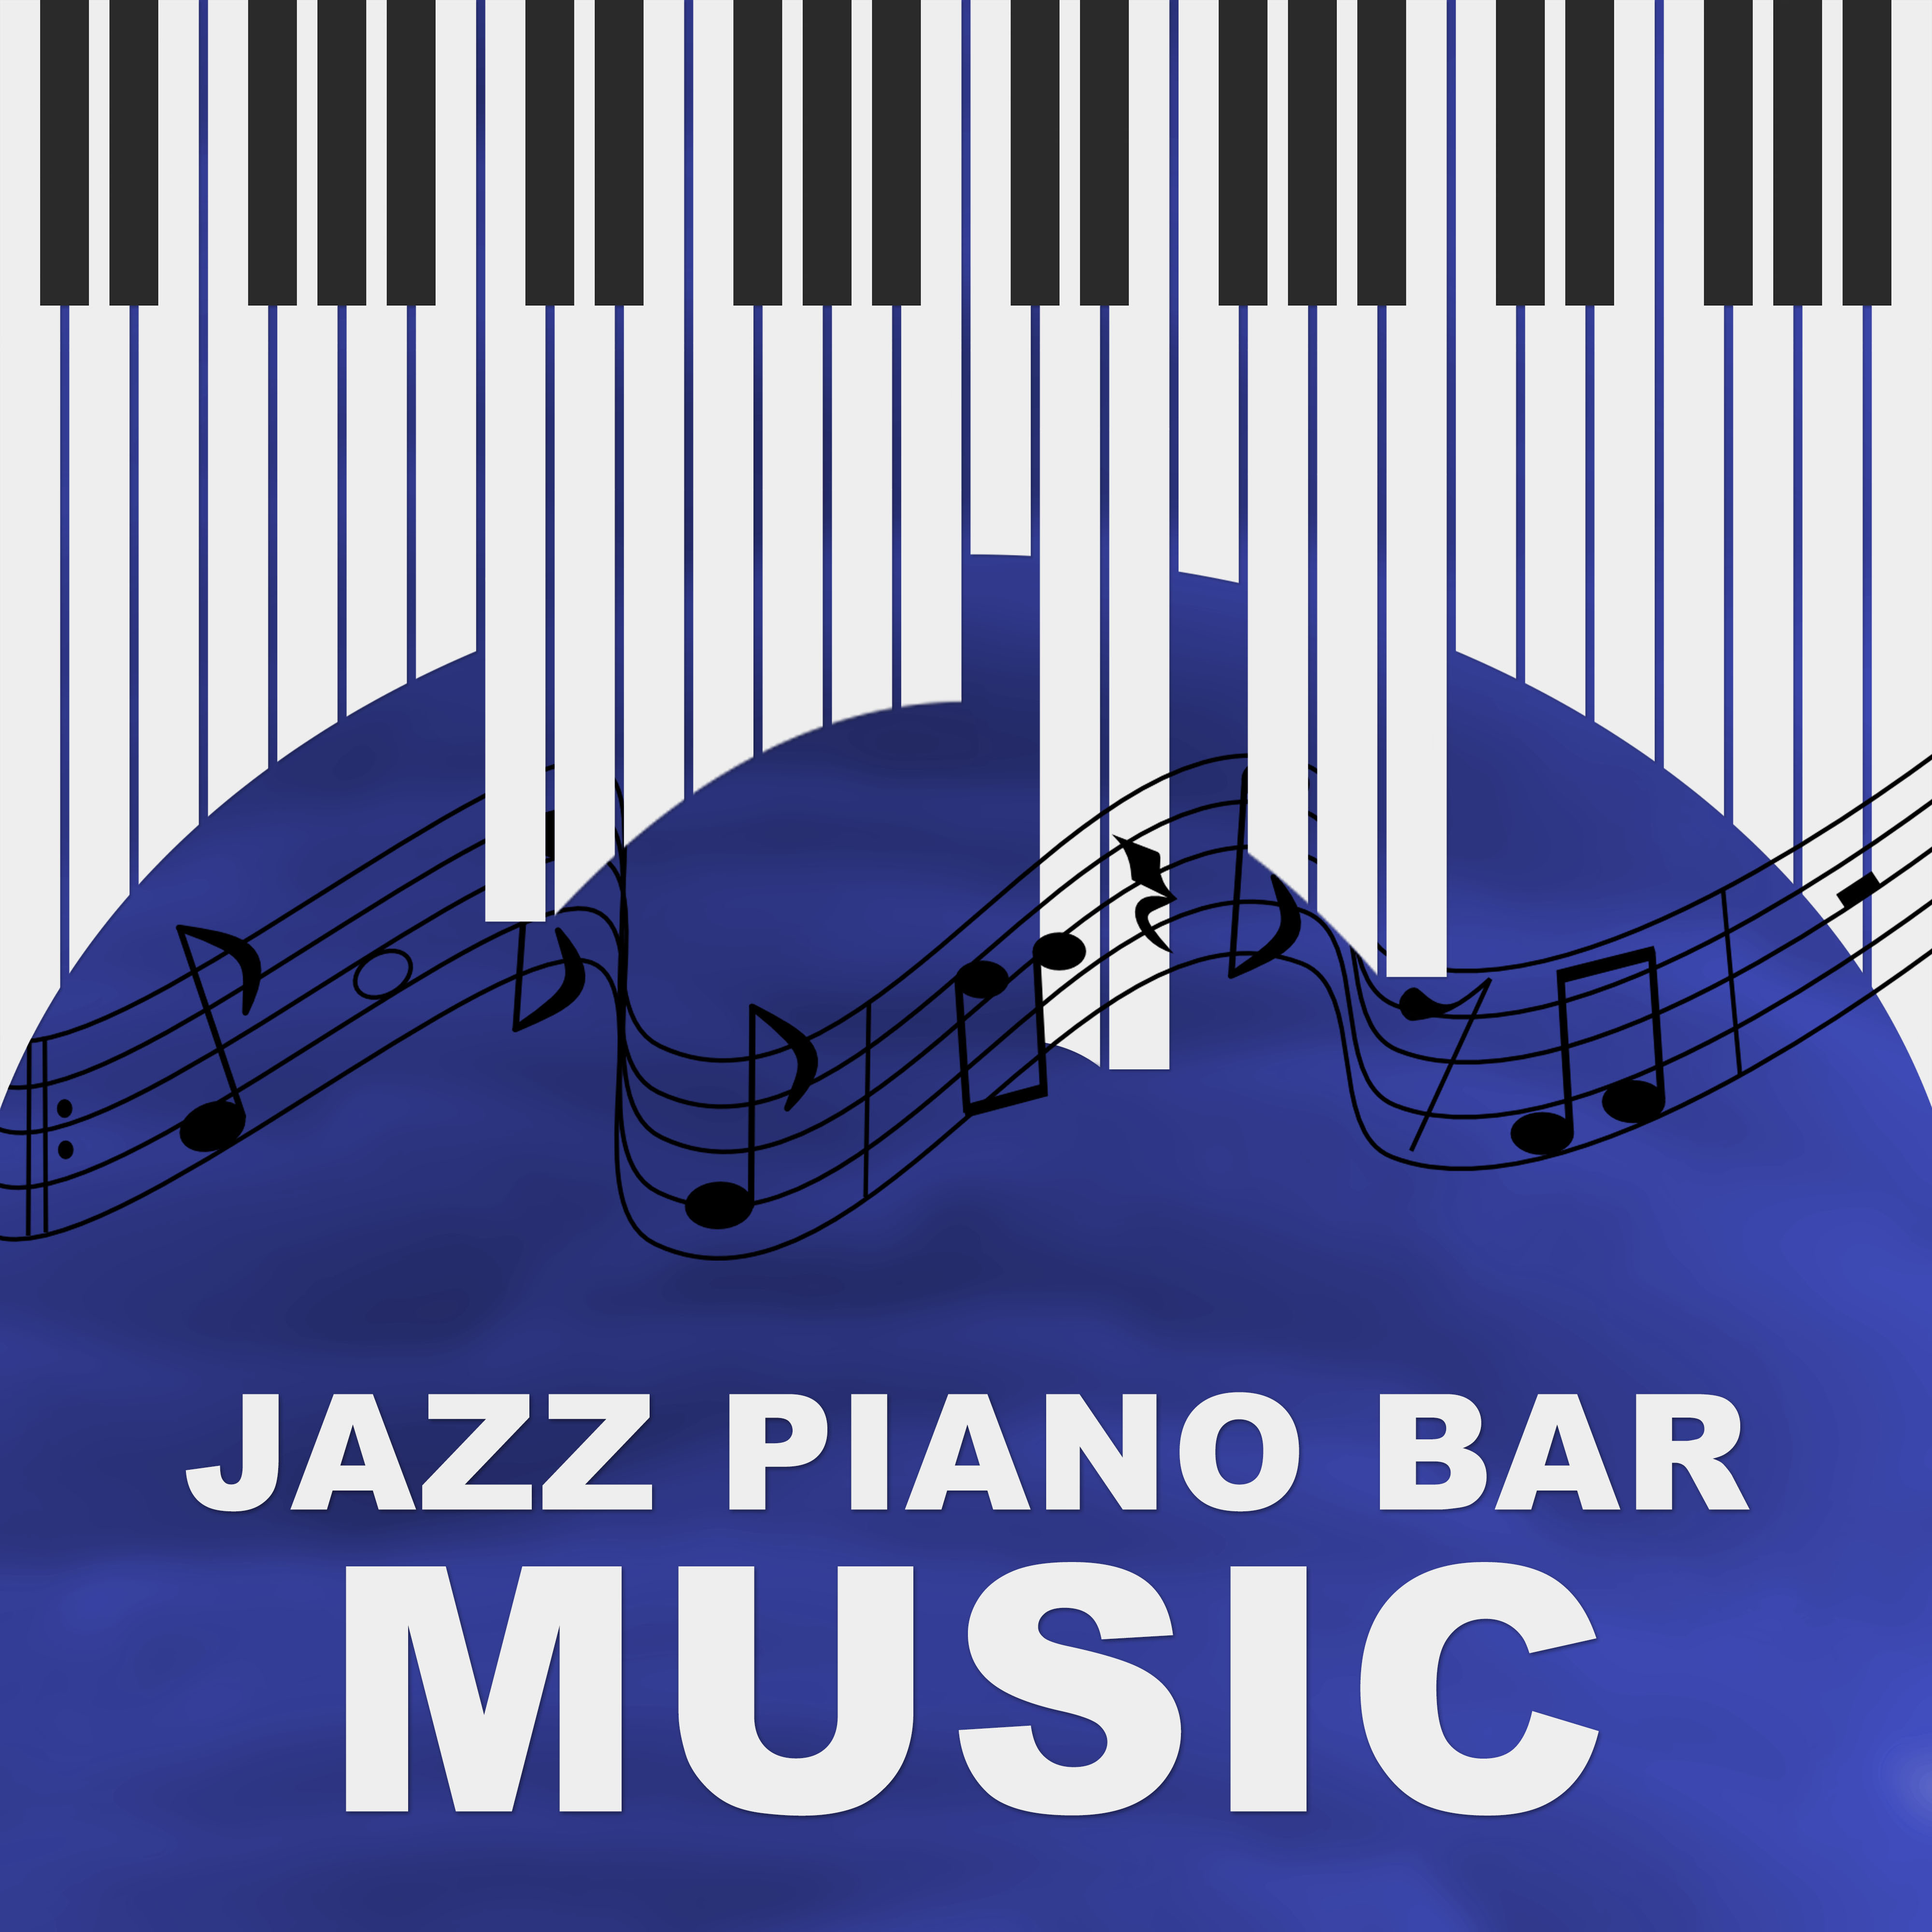 Jazz Piano Bar Music -Smooth Piano Jazz, Relaxing Piano, Soft Jazz Sounds, Chill Jazz, Cafe Bar